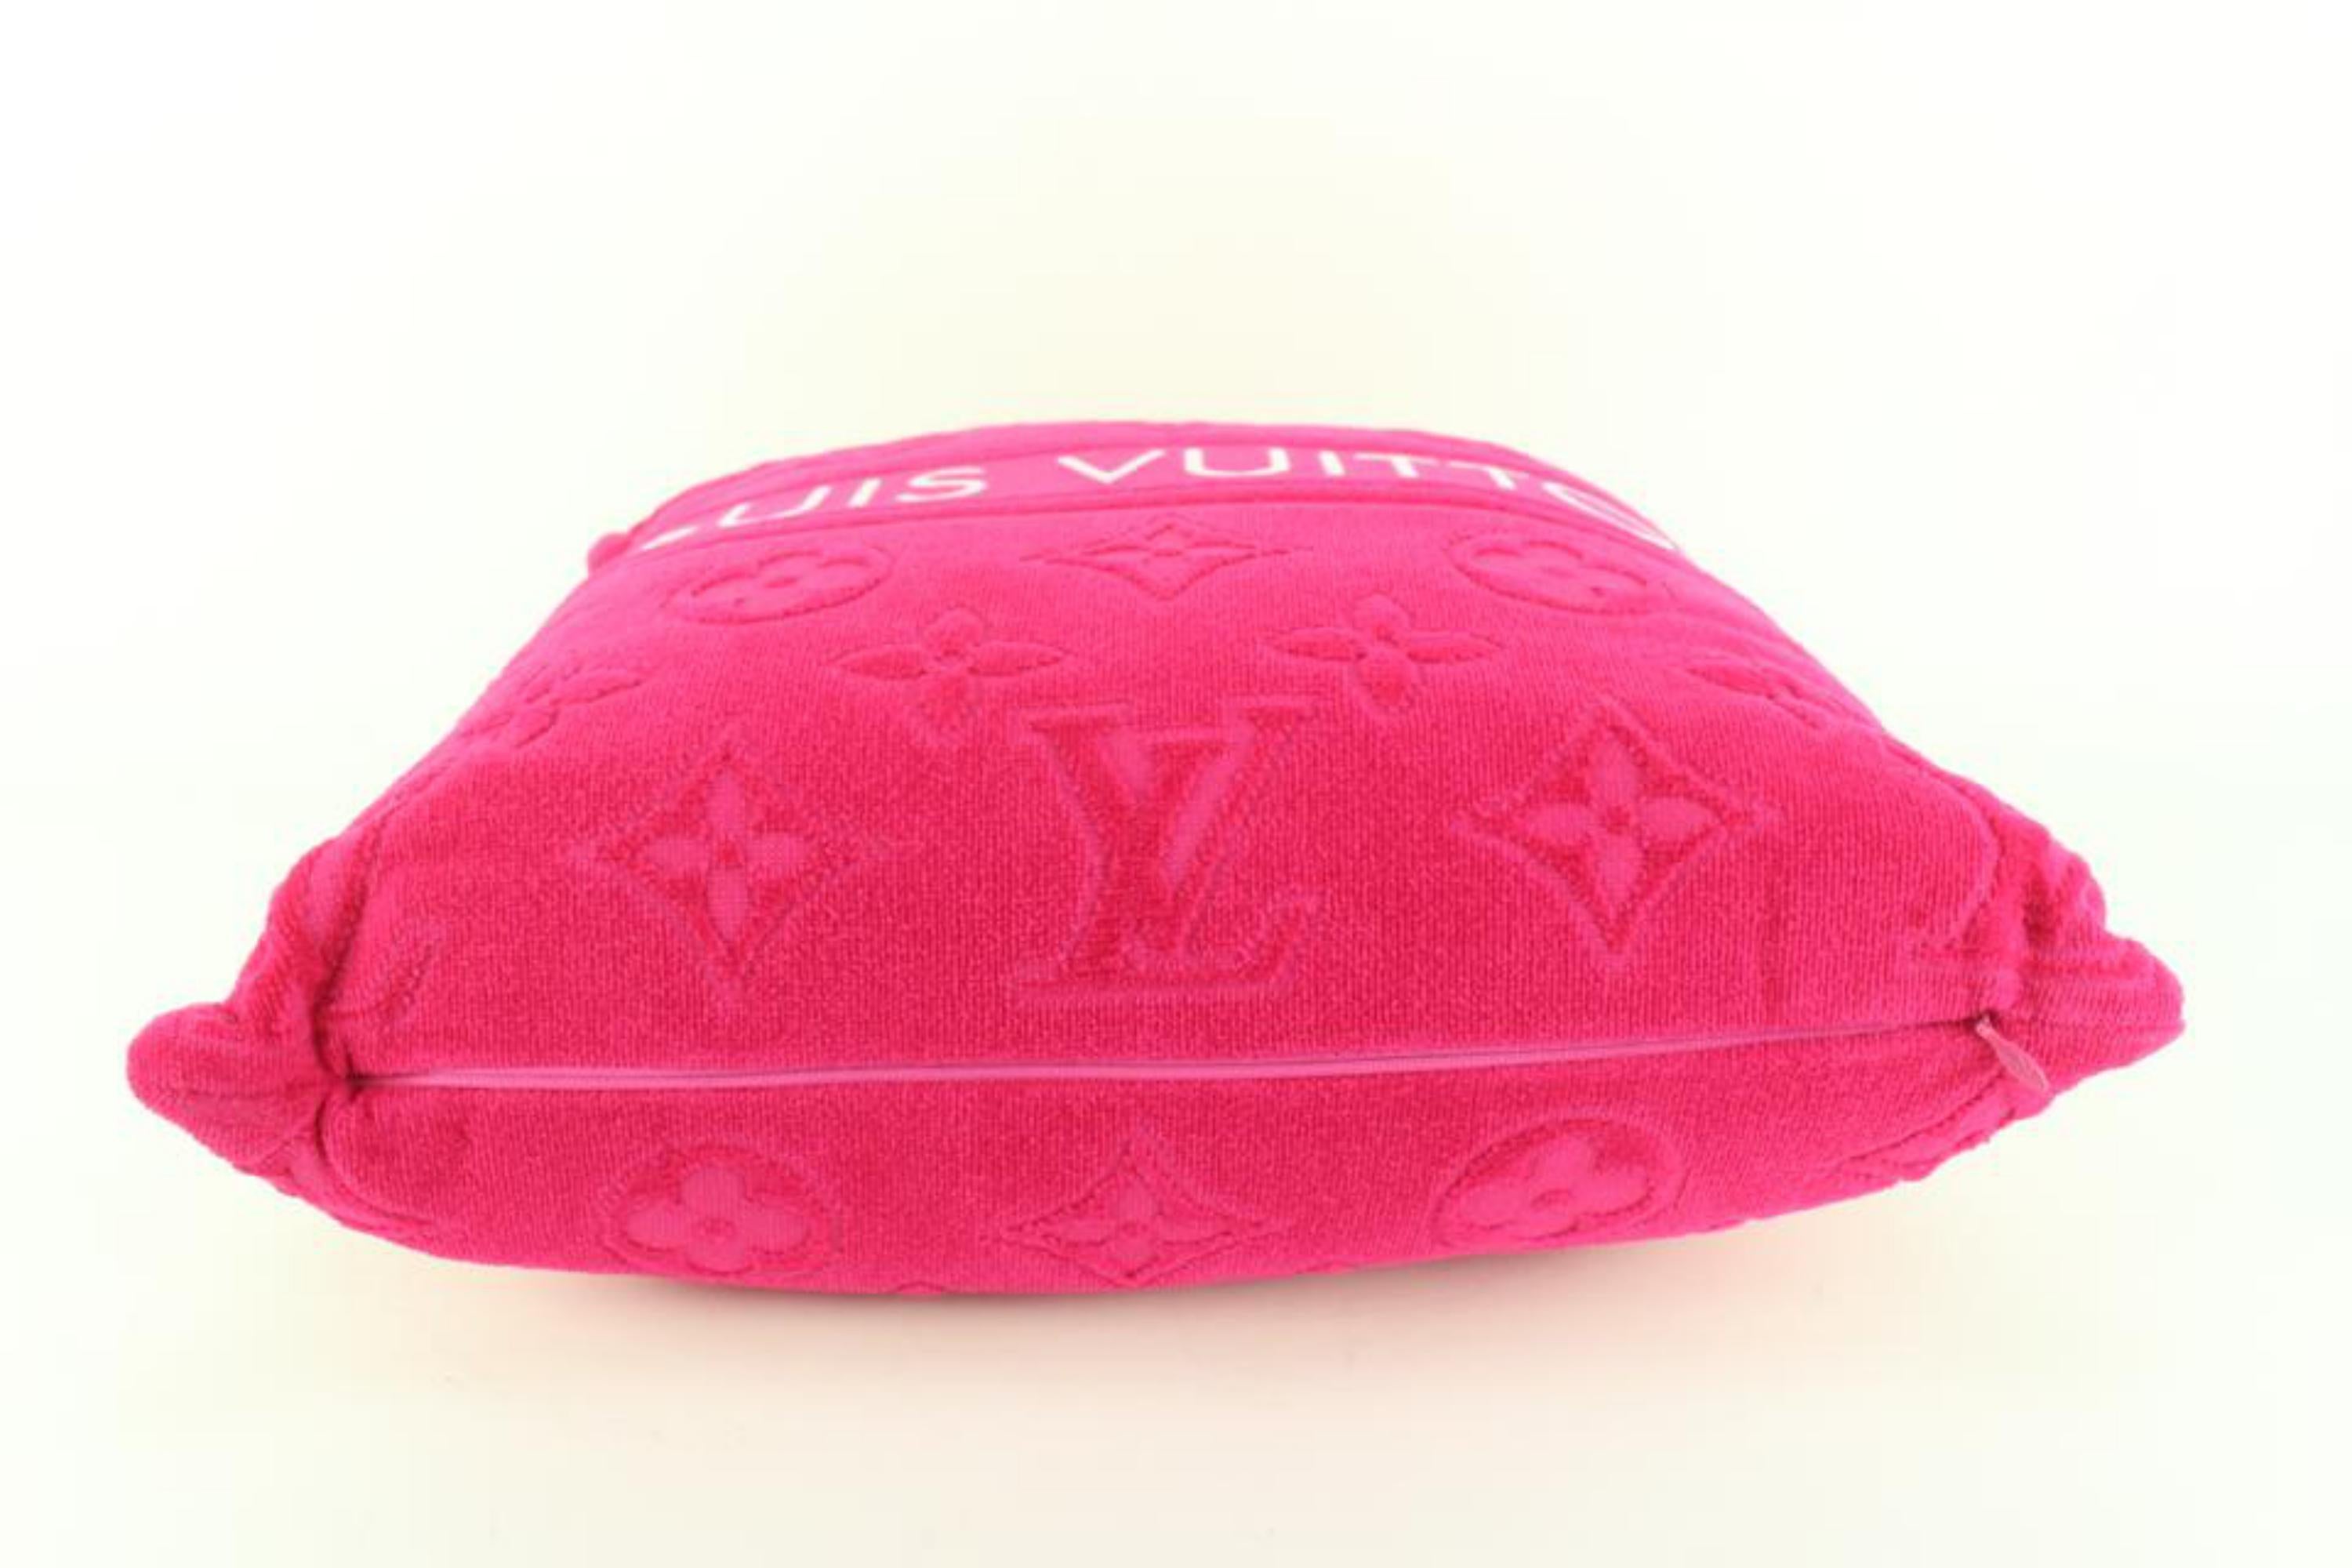 Louis Vuitton Hot Pink LVacation Fuchsia Monogram Beach Pillow 57lz55s 1